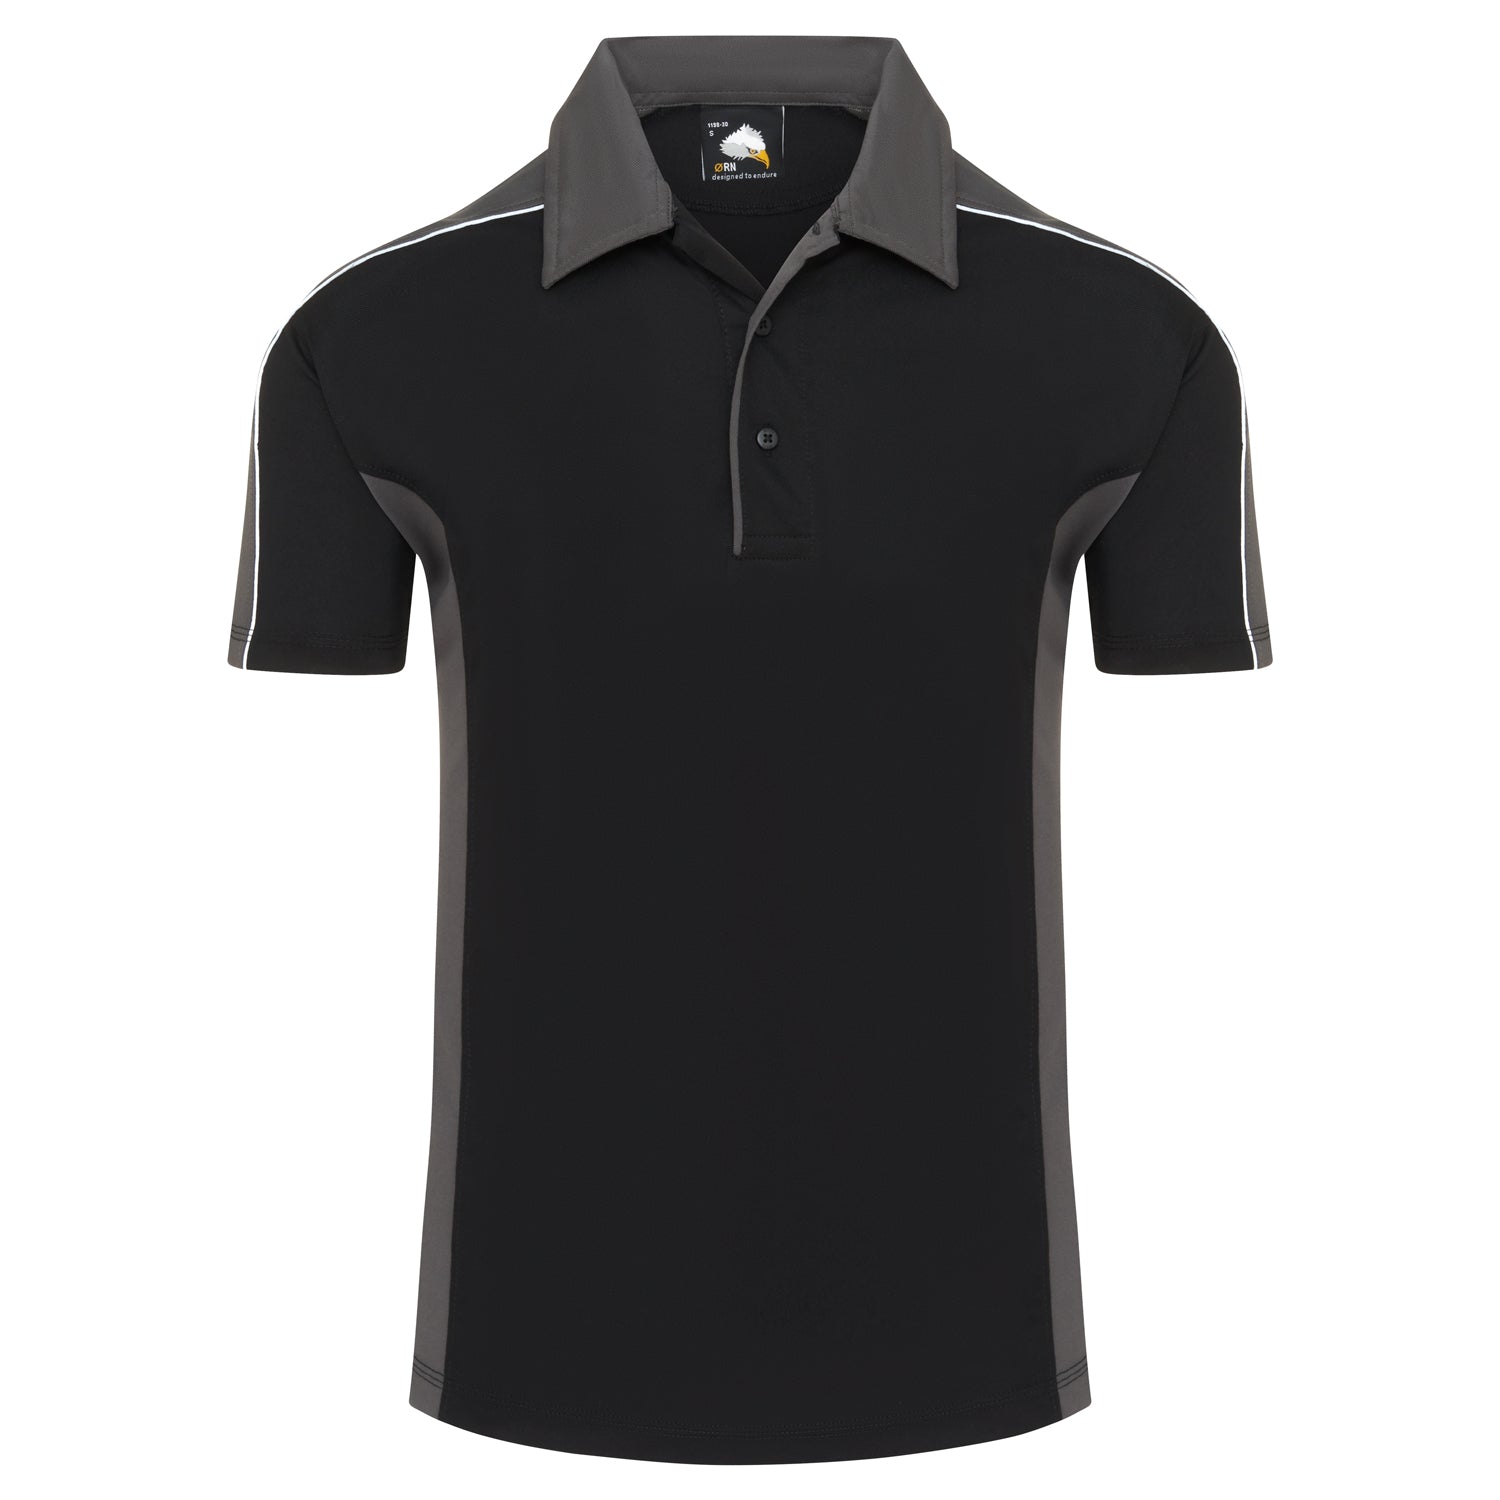 ORN Avocet Wicking Poloshirt - Black/Grey